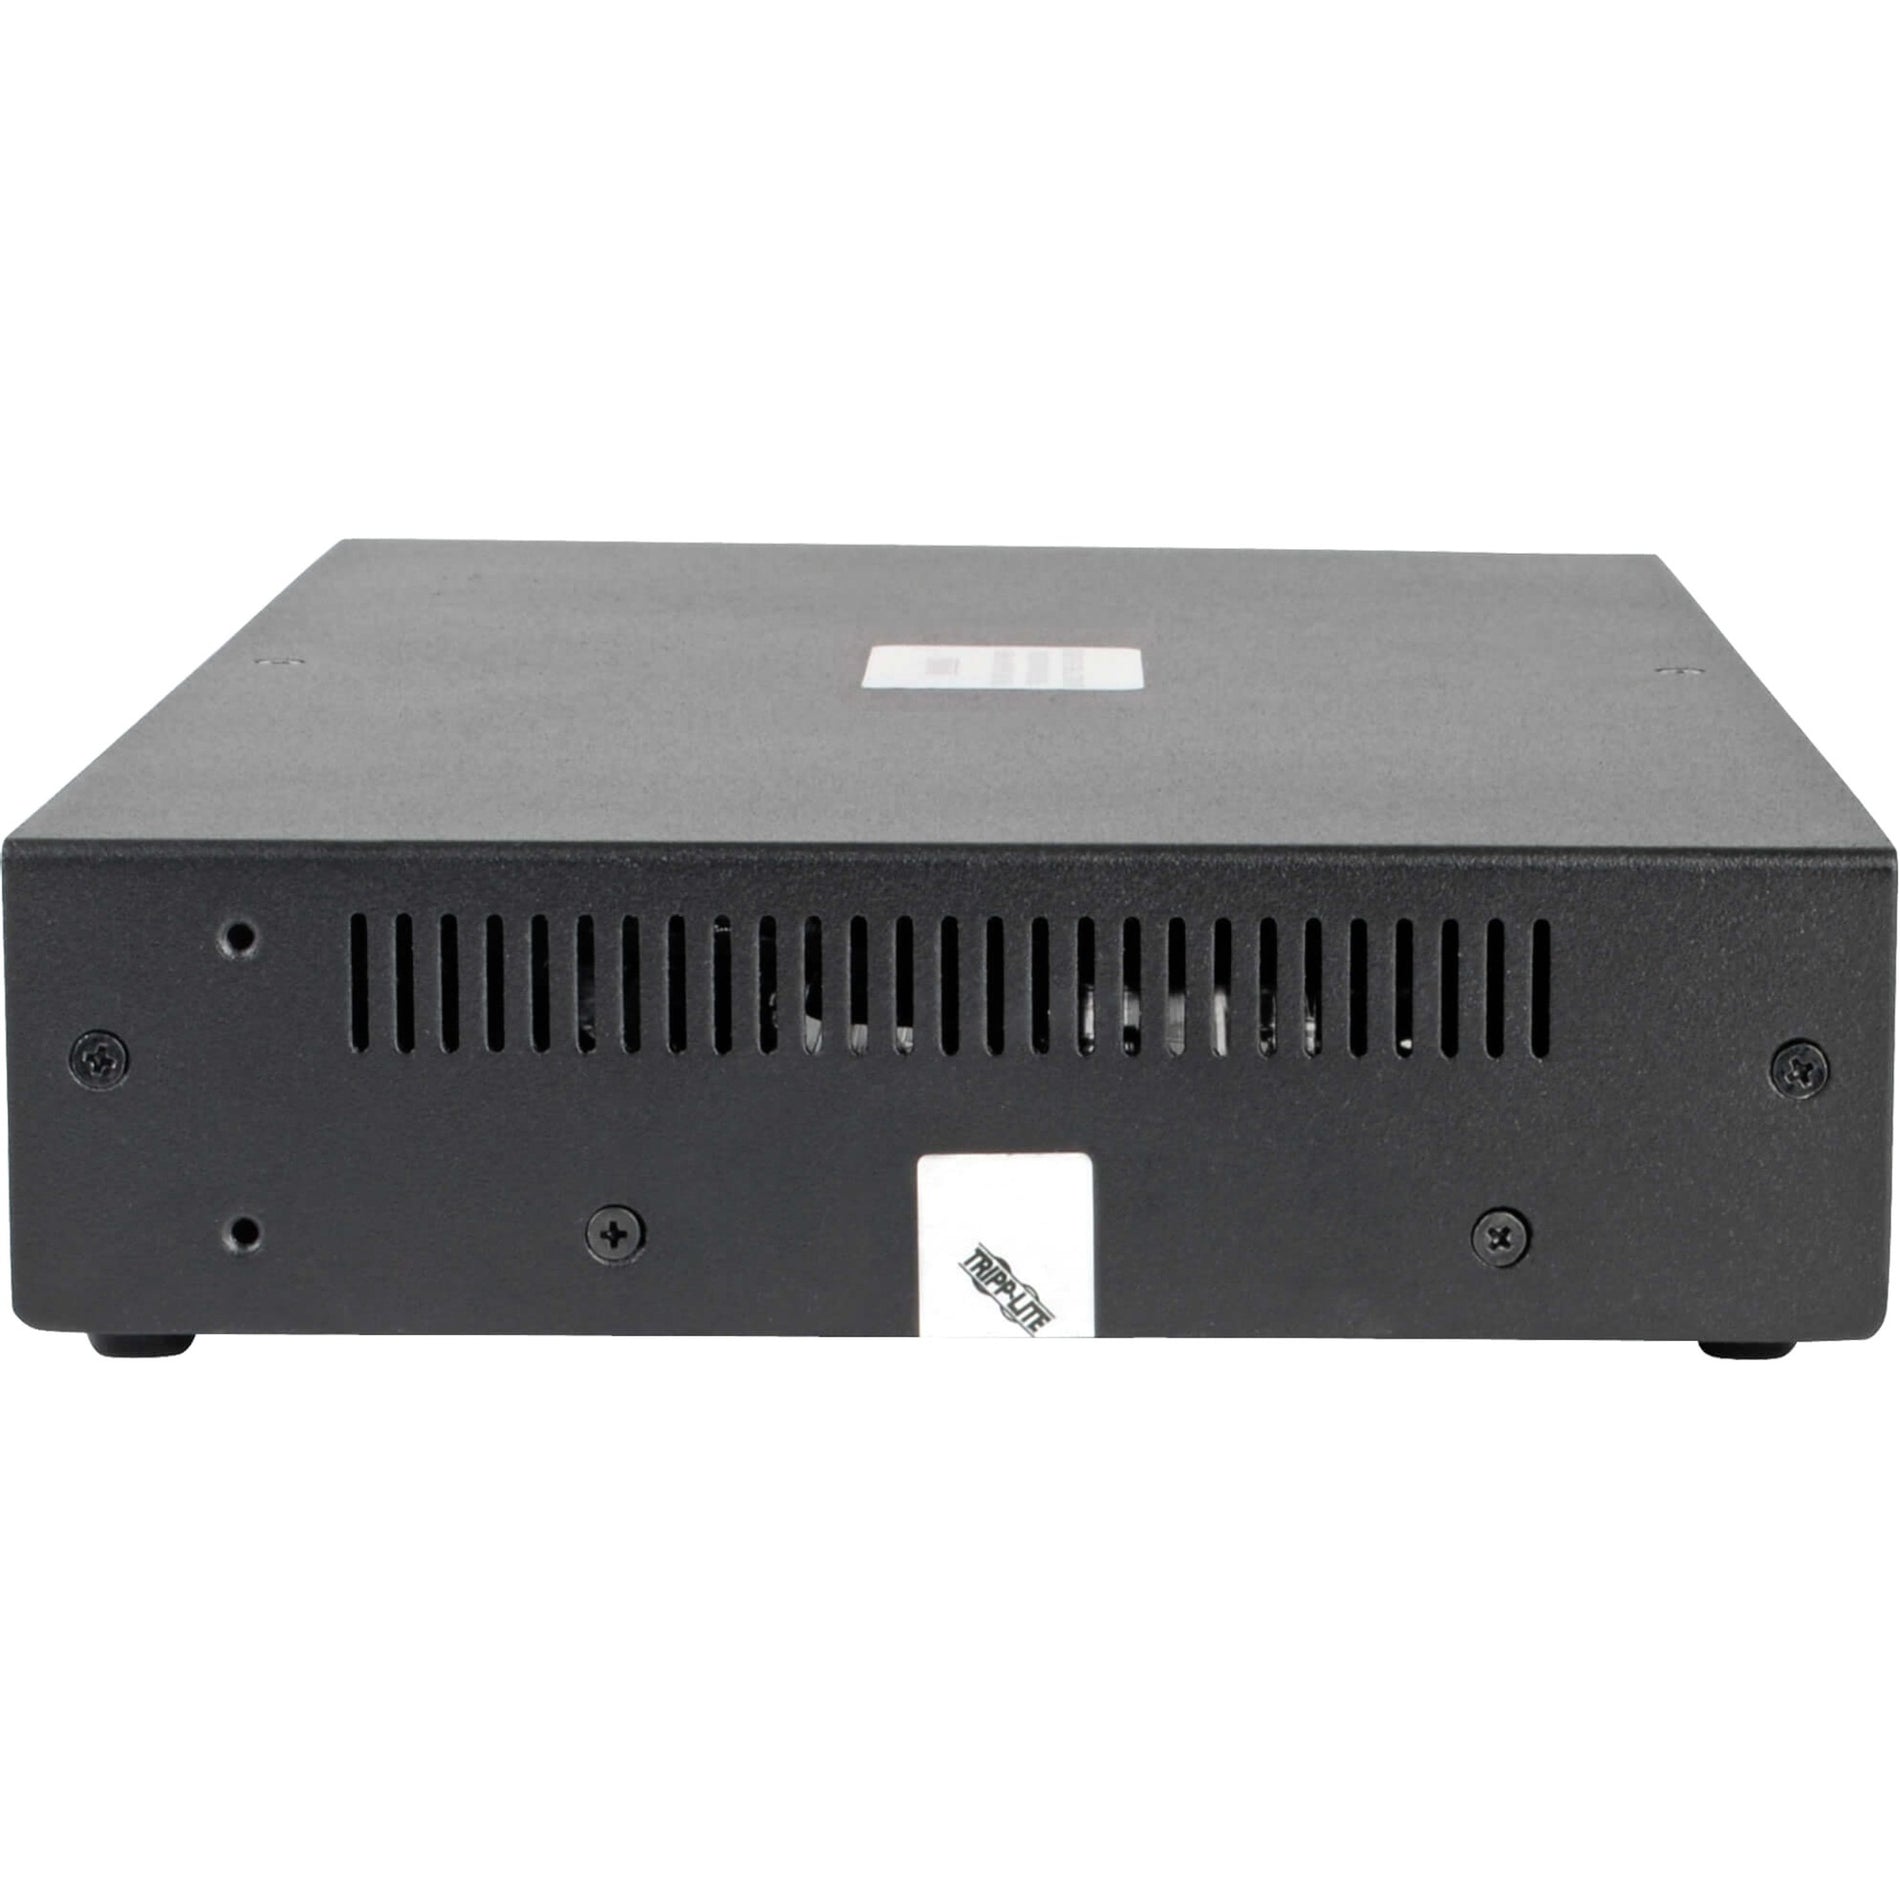 Tripp Lite B002-DV1A4 4-Port NIAP PP3.0-Certified DVI-I KVM Switch, Maximum Video Resolution 2560 x 1600, 3 Year Warranty